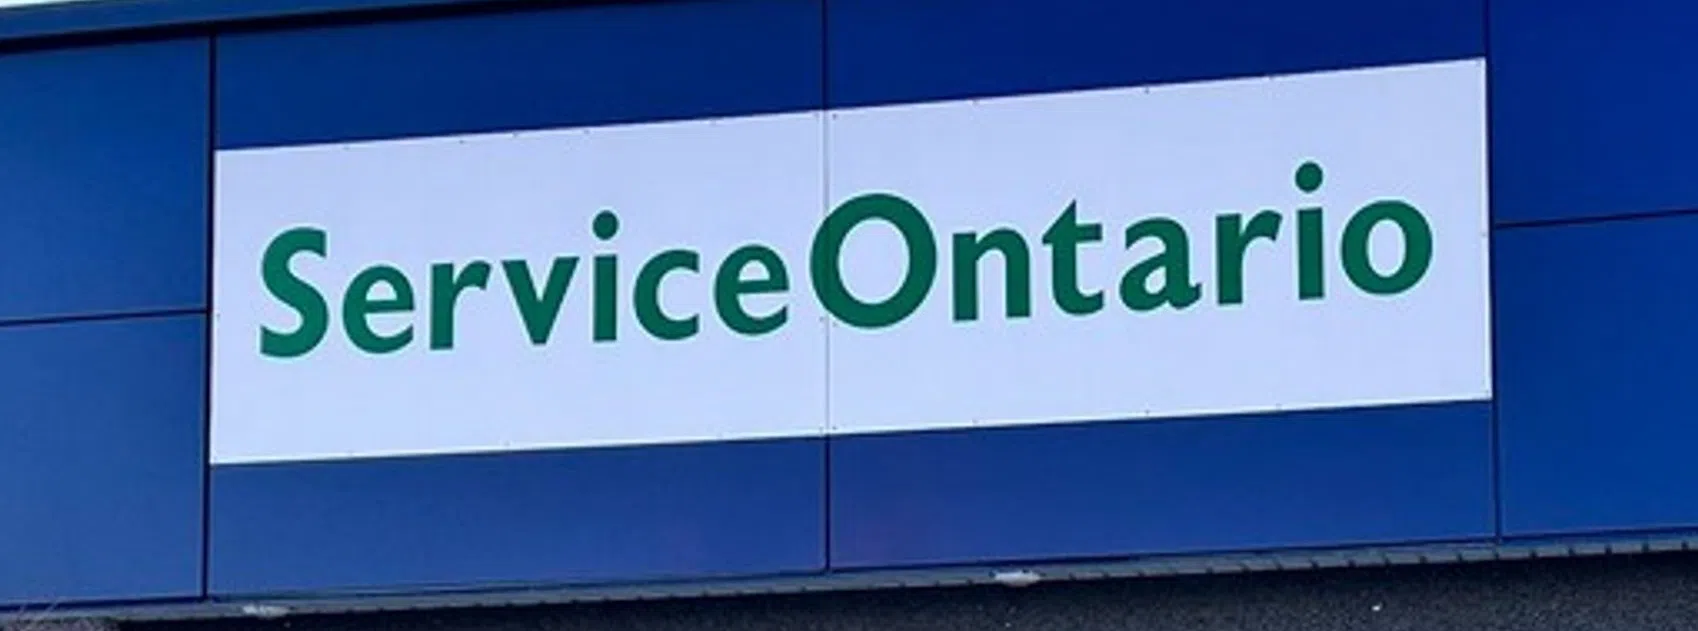 Service Ontario Sign File 